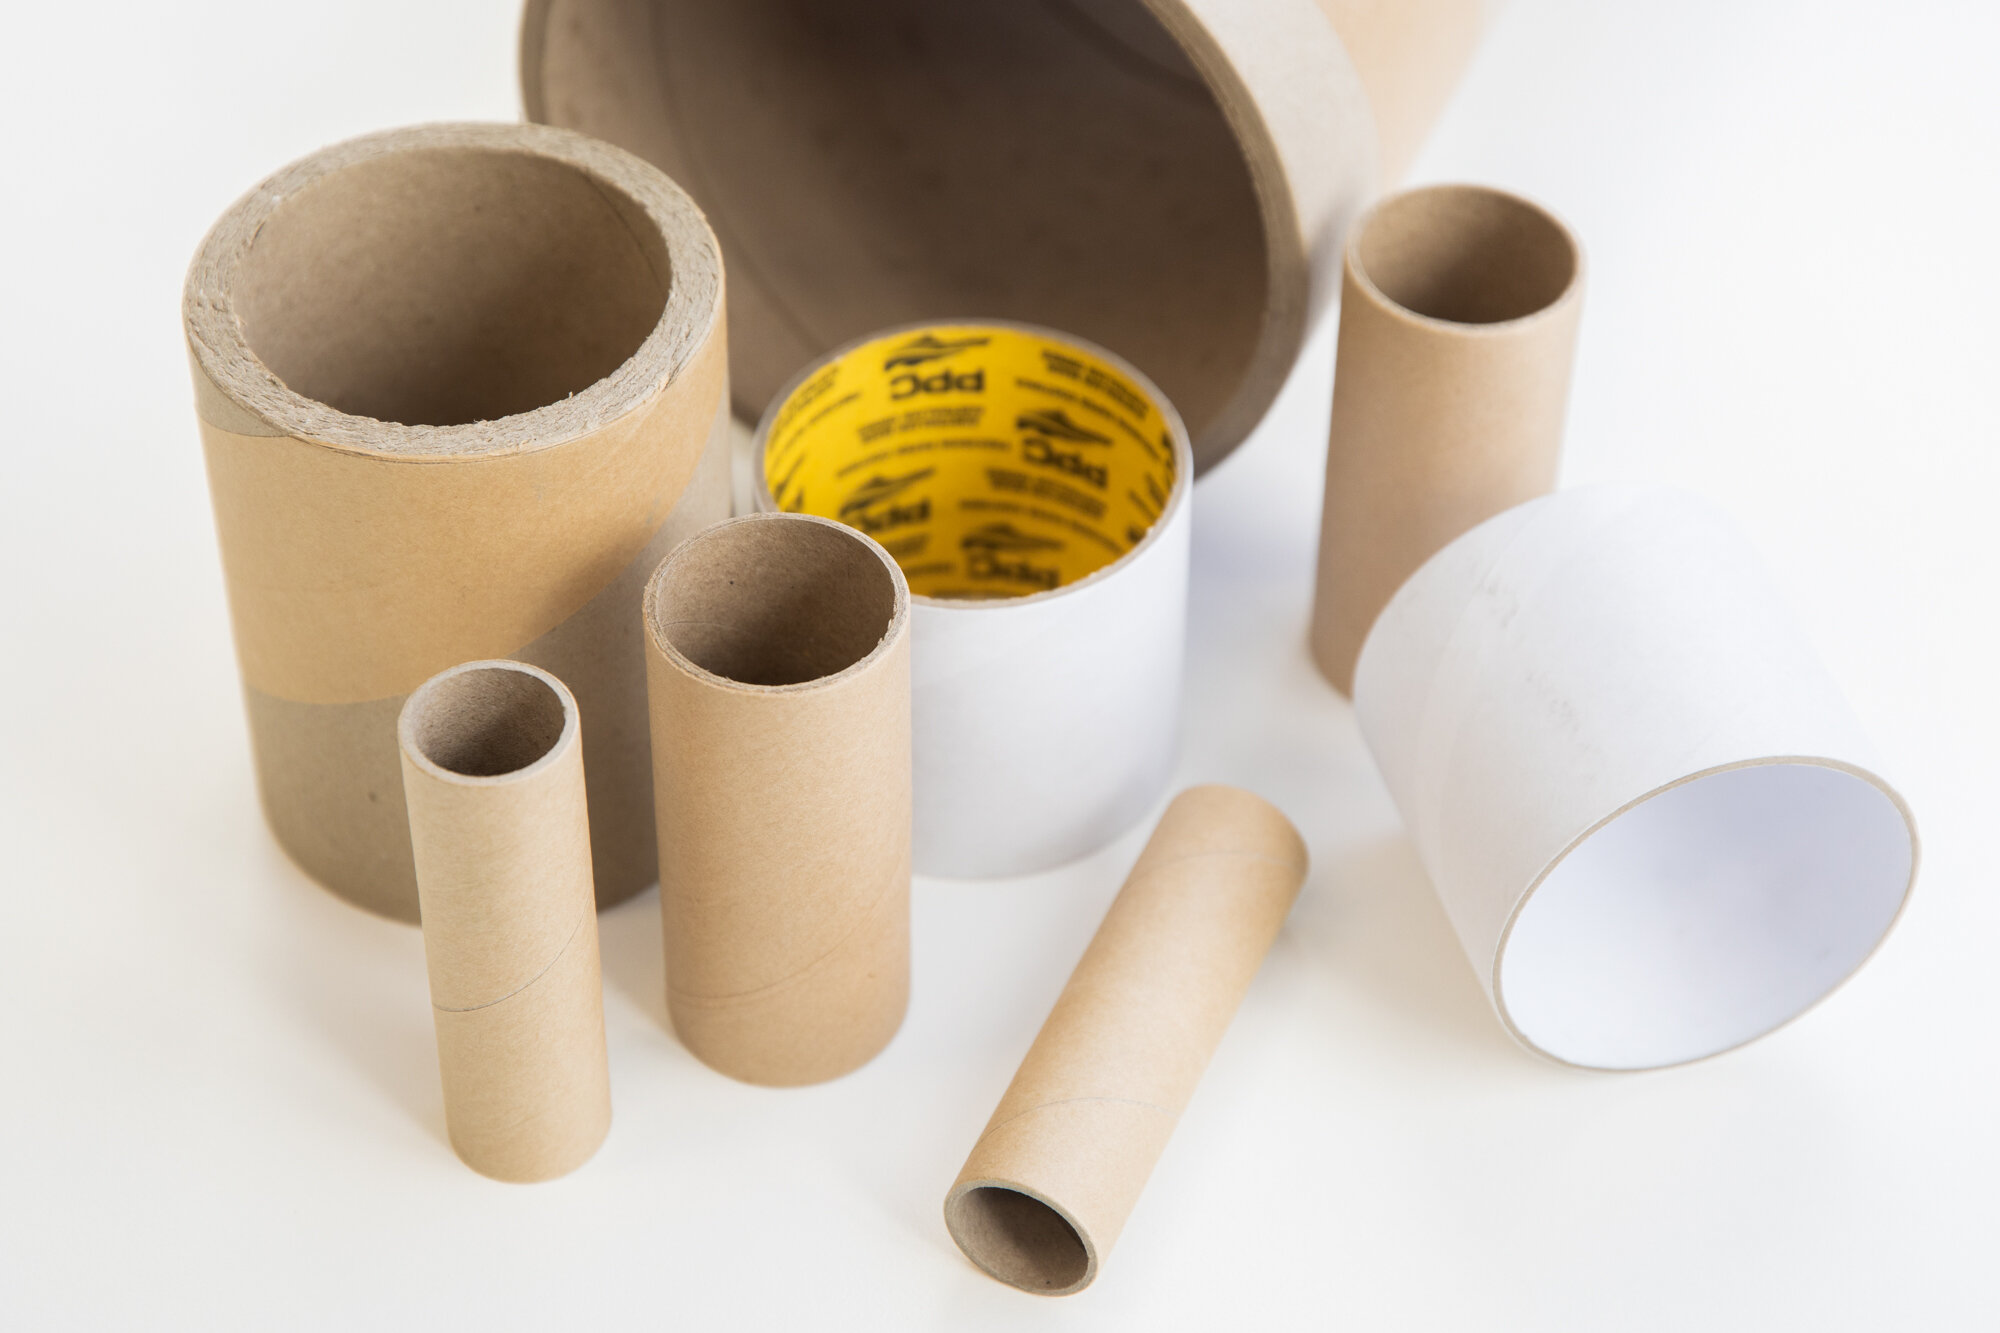 Large Cardboard Tubes - Qty:2